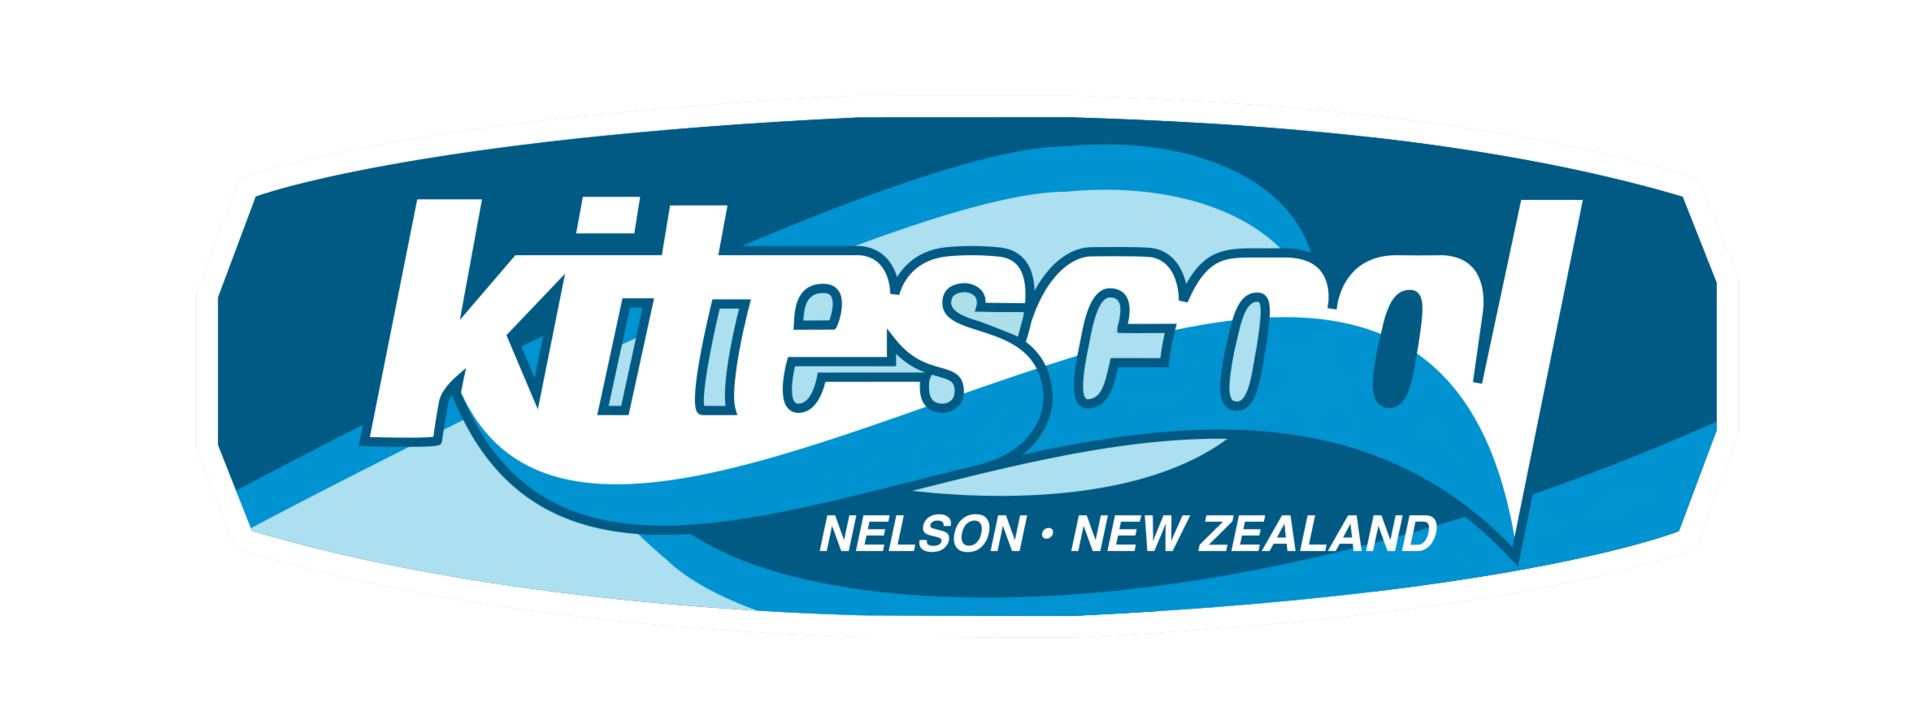 Kitescool-logo_transparent_0.png